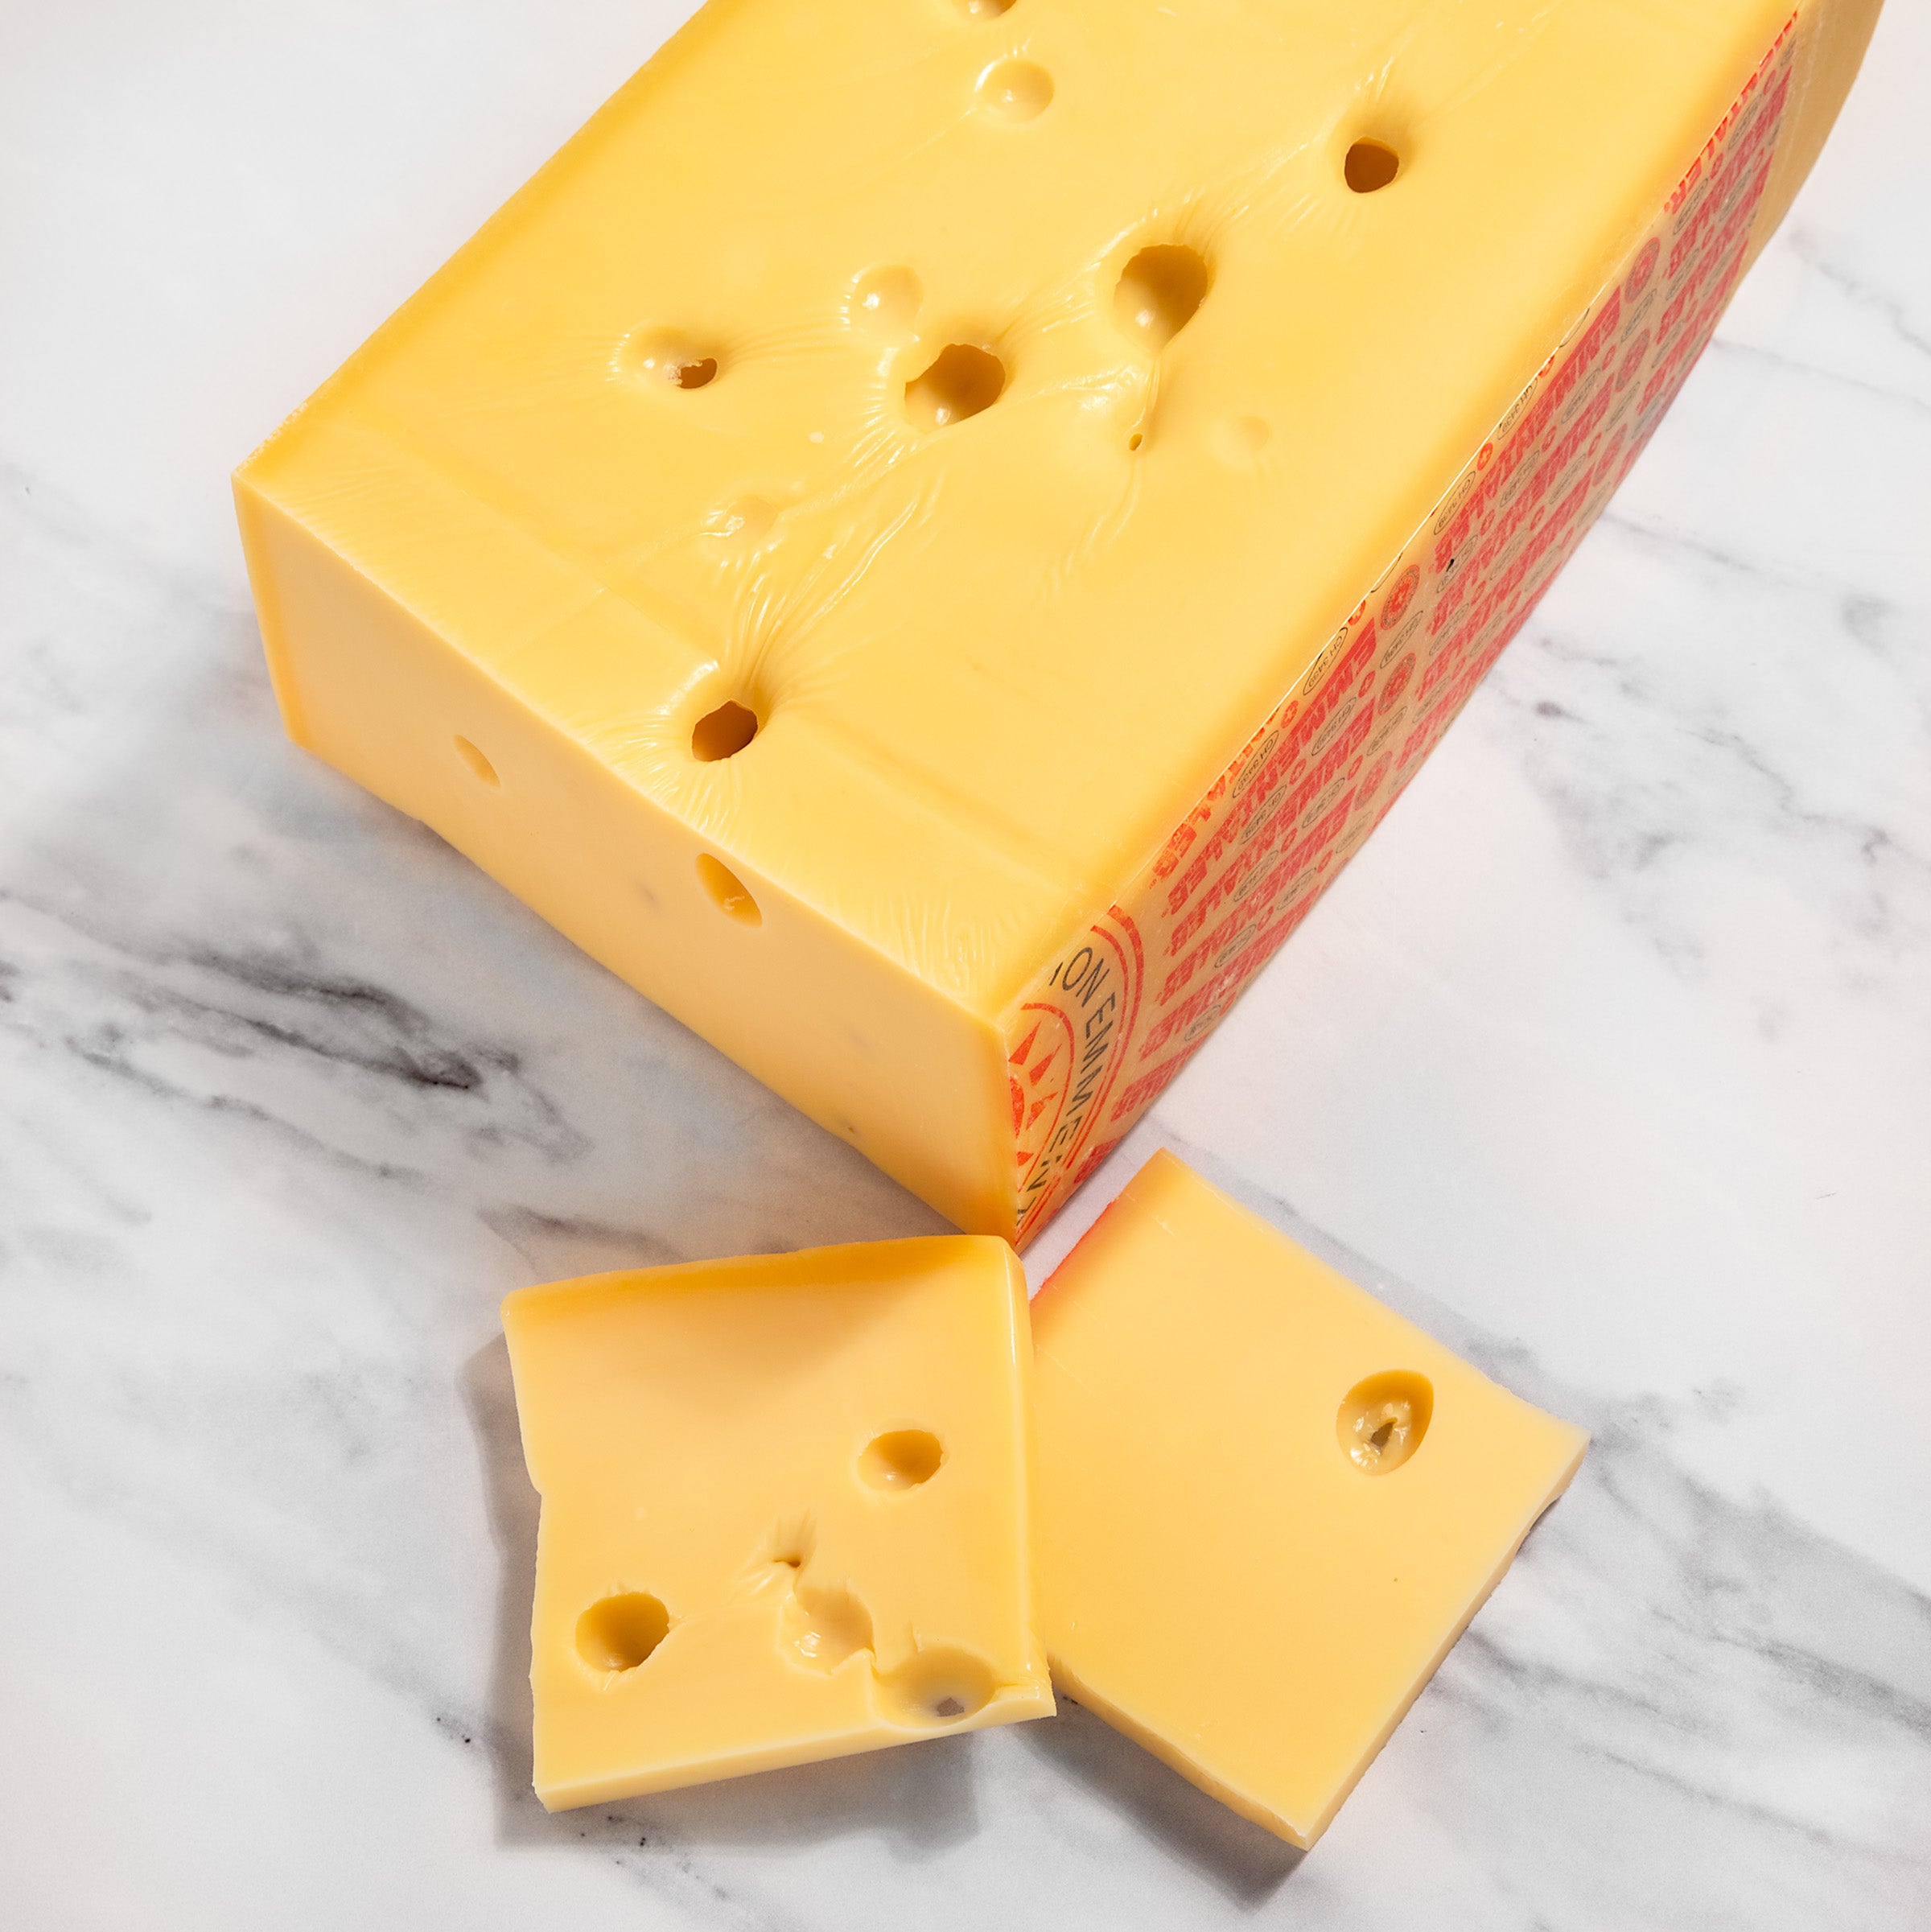 igourmet_481s_Swiss Emmentaler AOP Cheese_Cheese